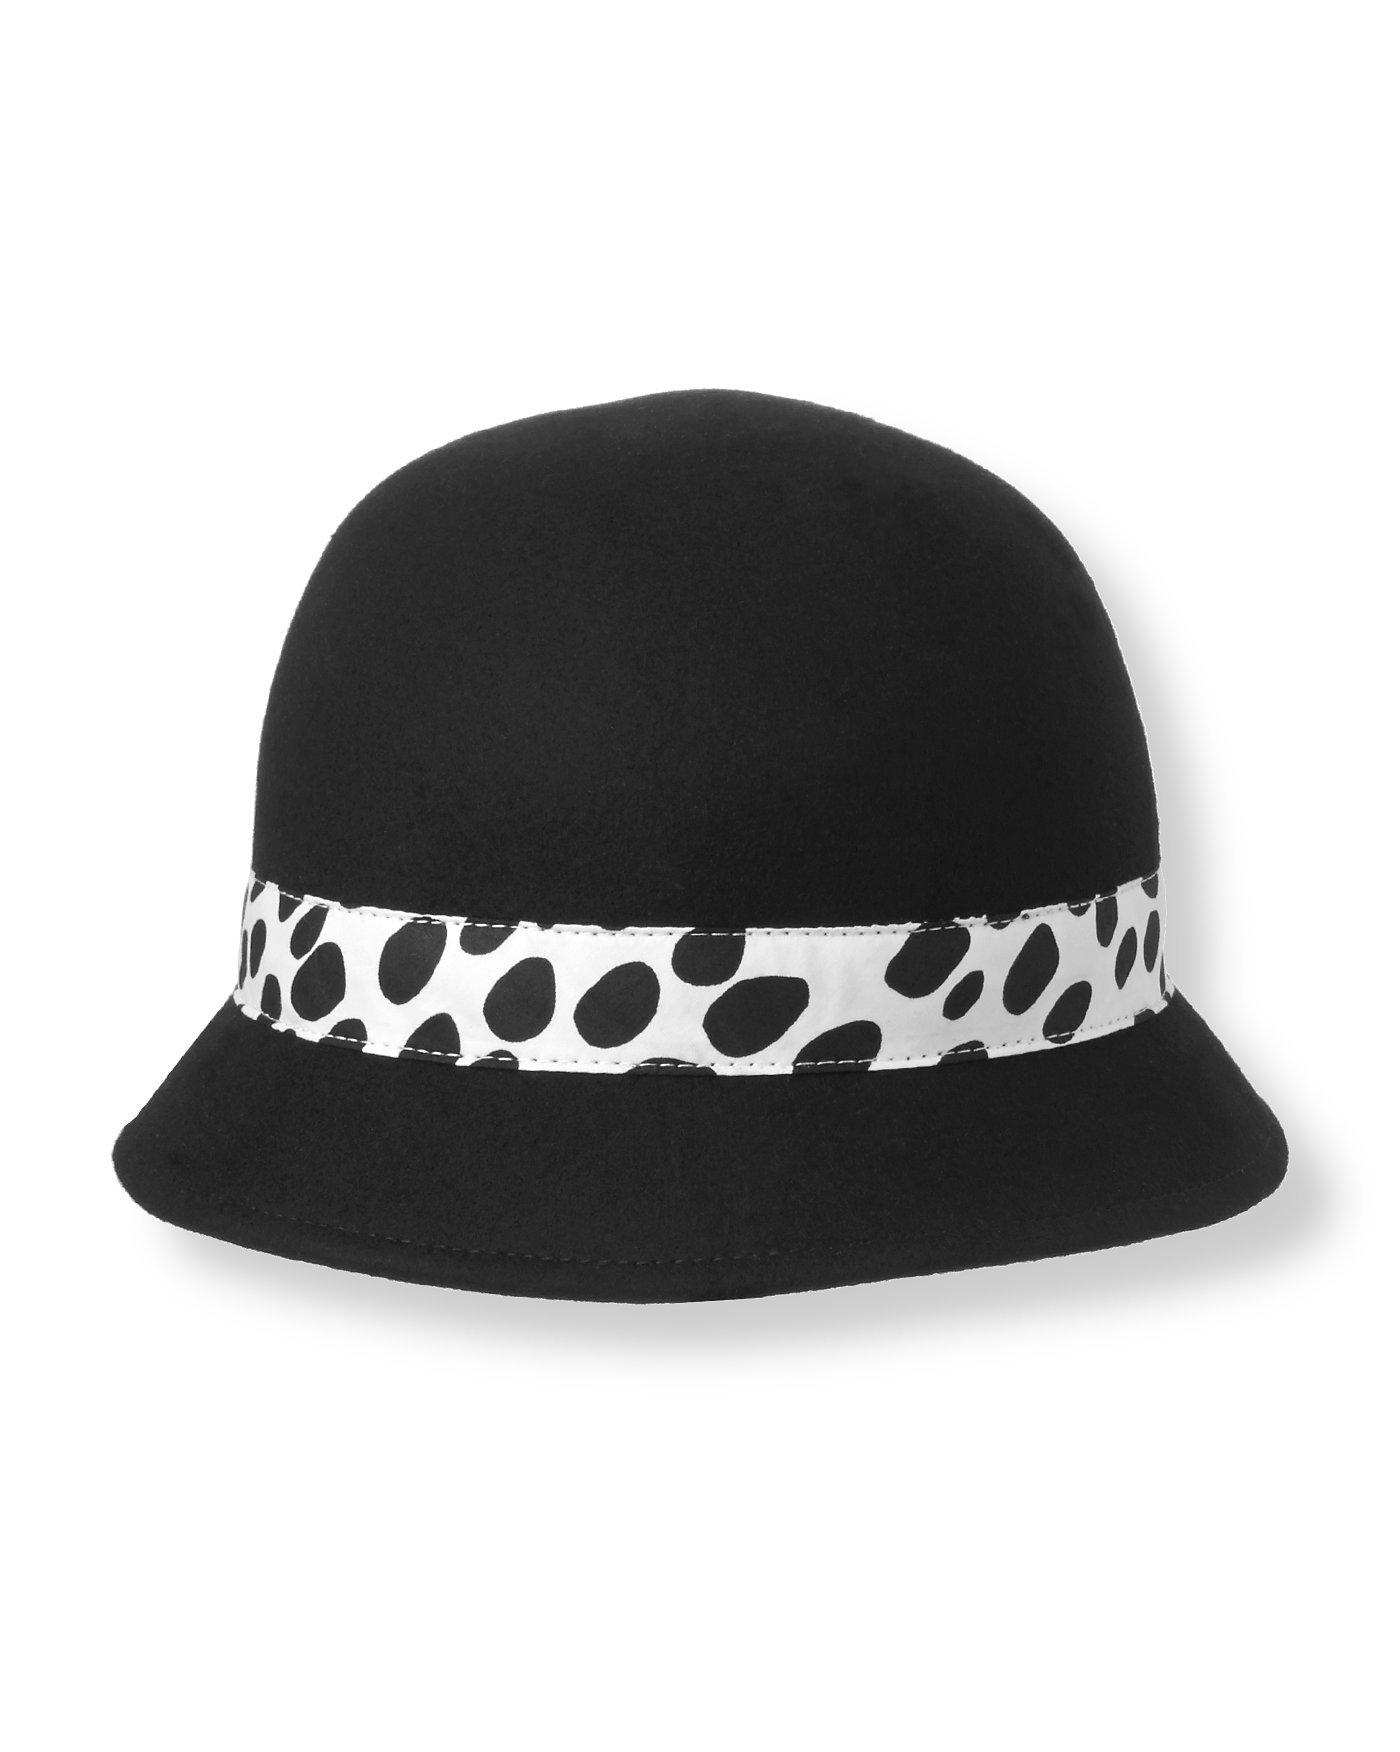 Dalmatian Dot Wool Cloche Hat image number 0